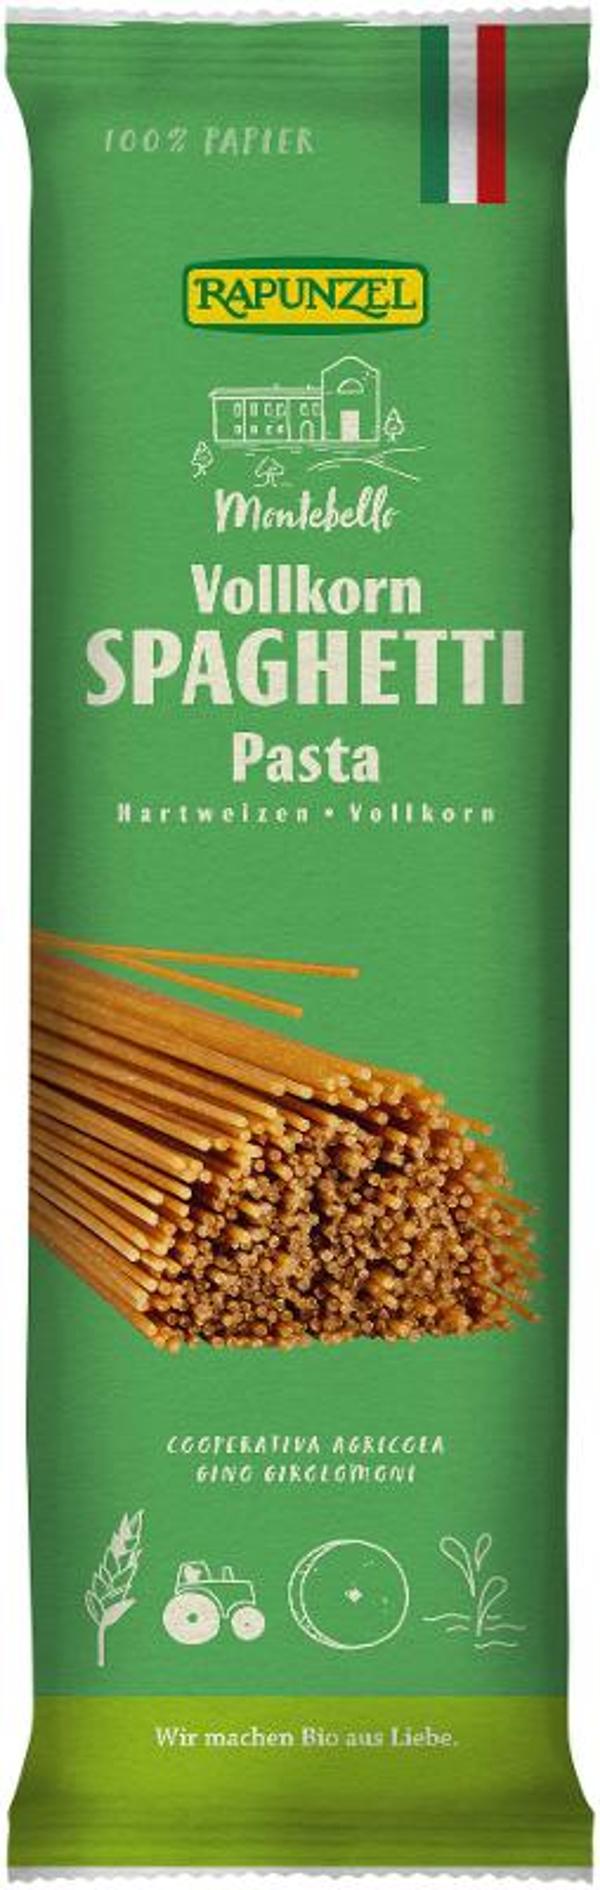 Produktfoto zu Spaghetti Vollkorn, 500g